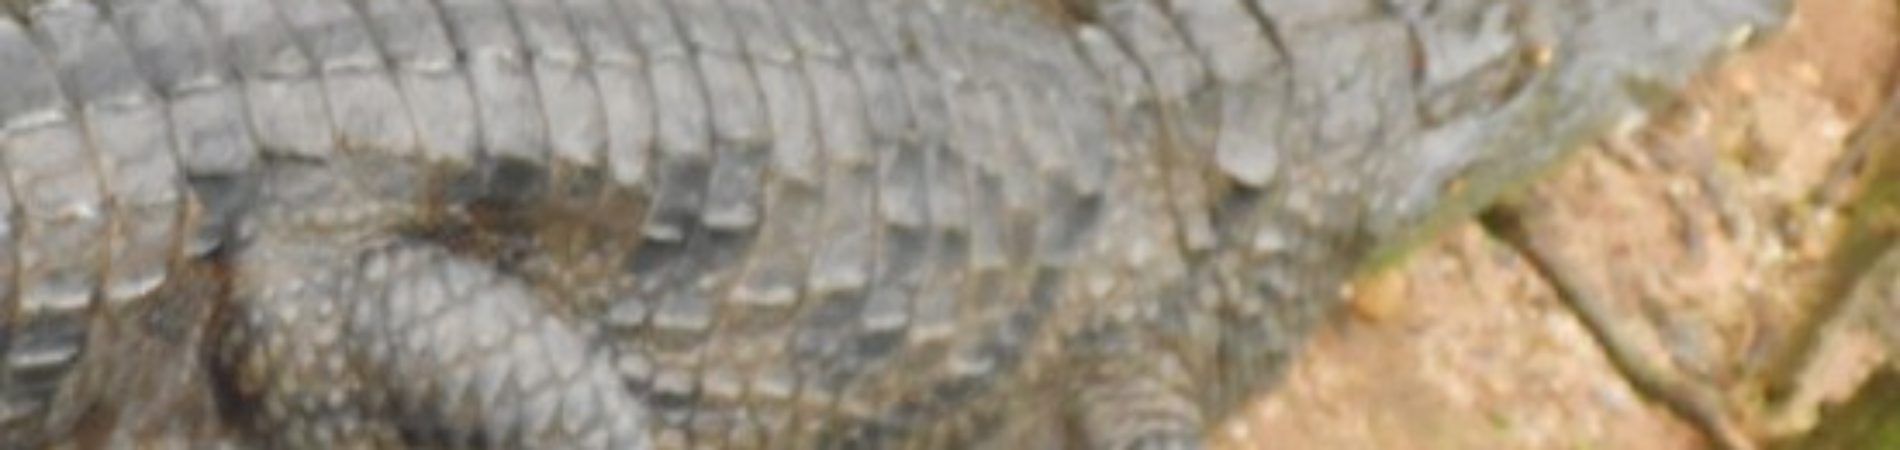 Crocodile at Nekede Zoo